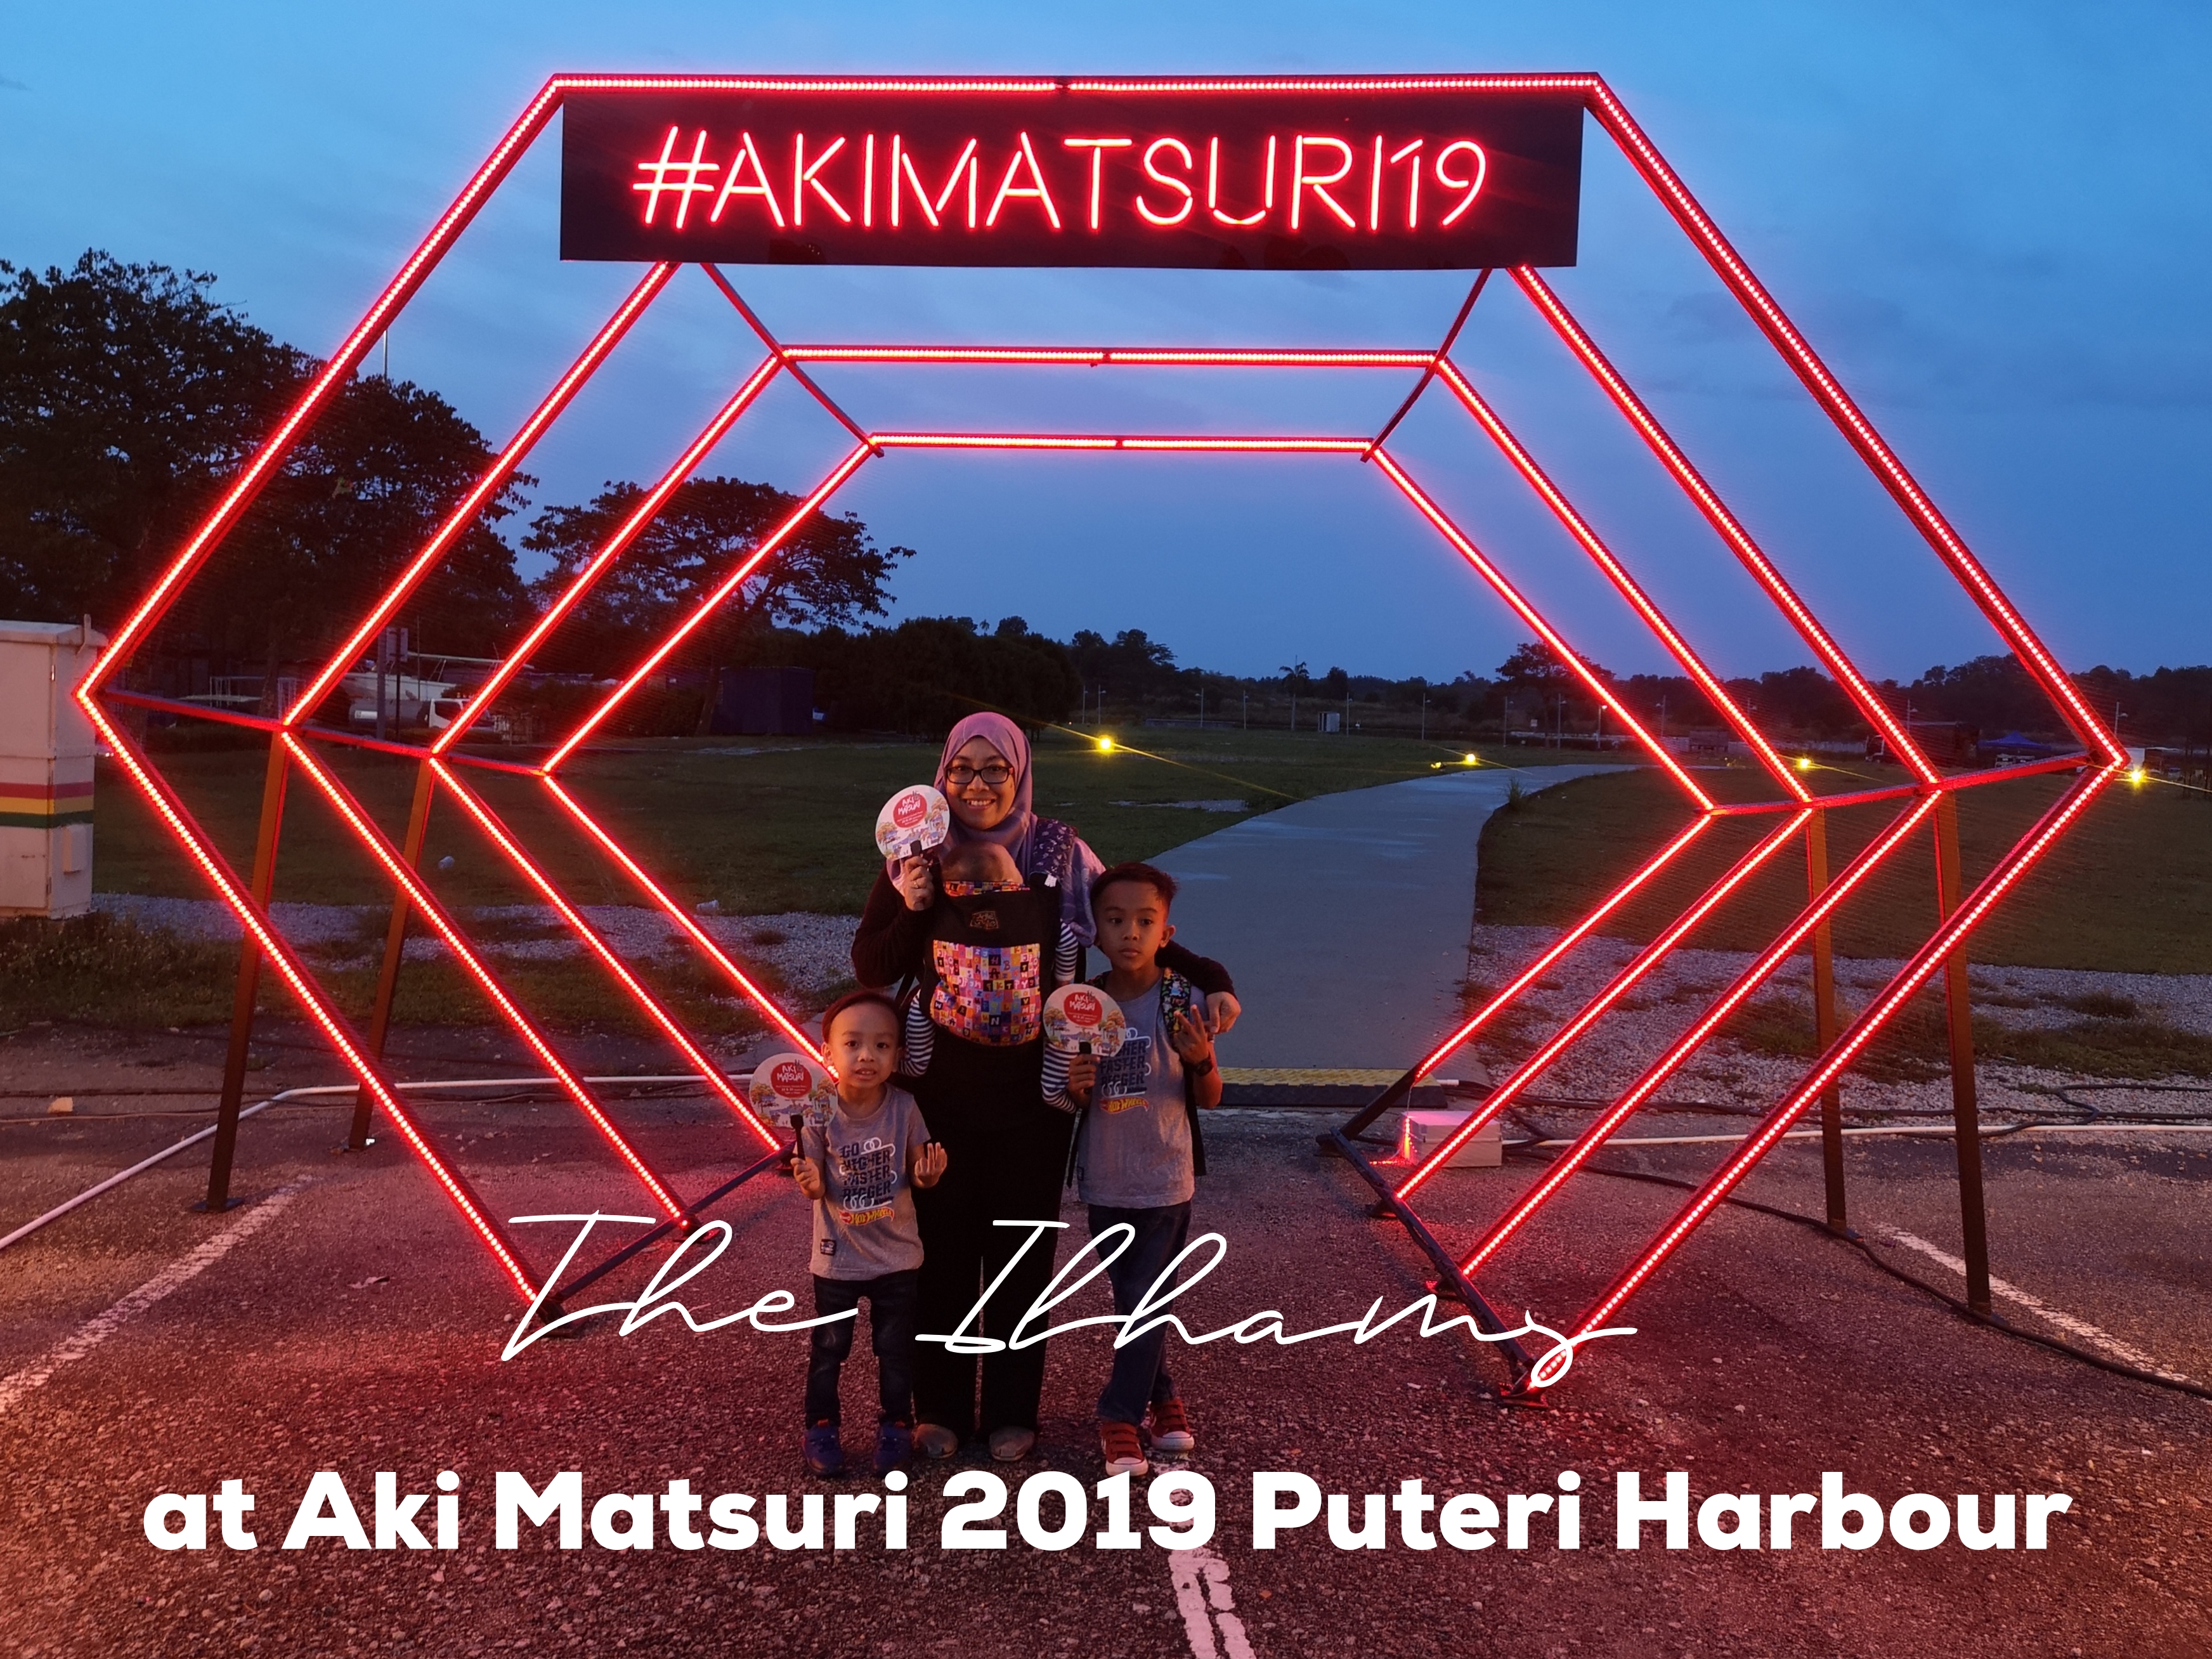 The Ilhams at Aki Matsuri 2019 Puteri Harbour